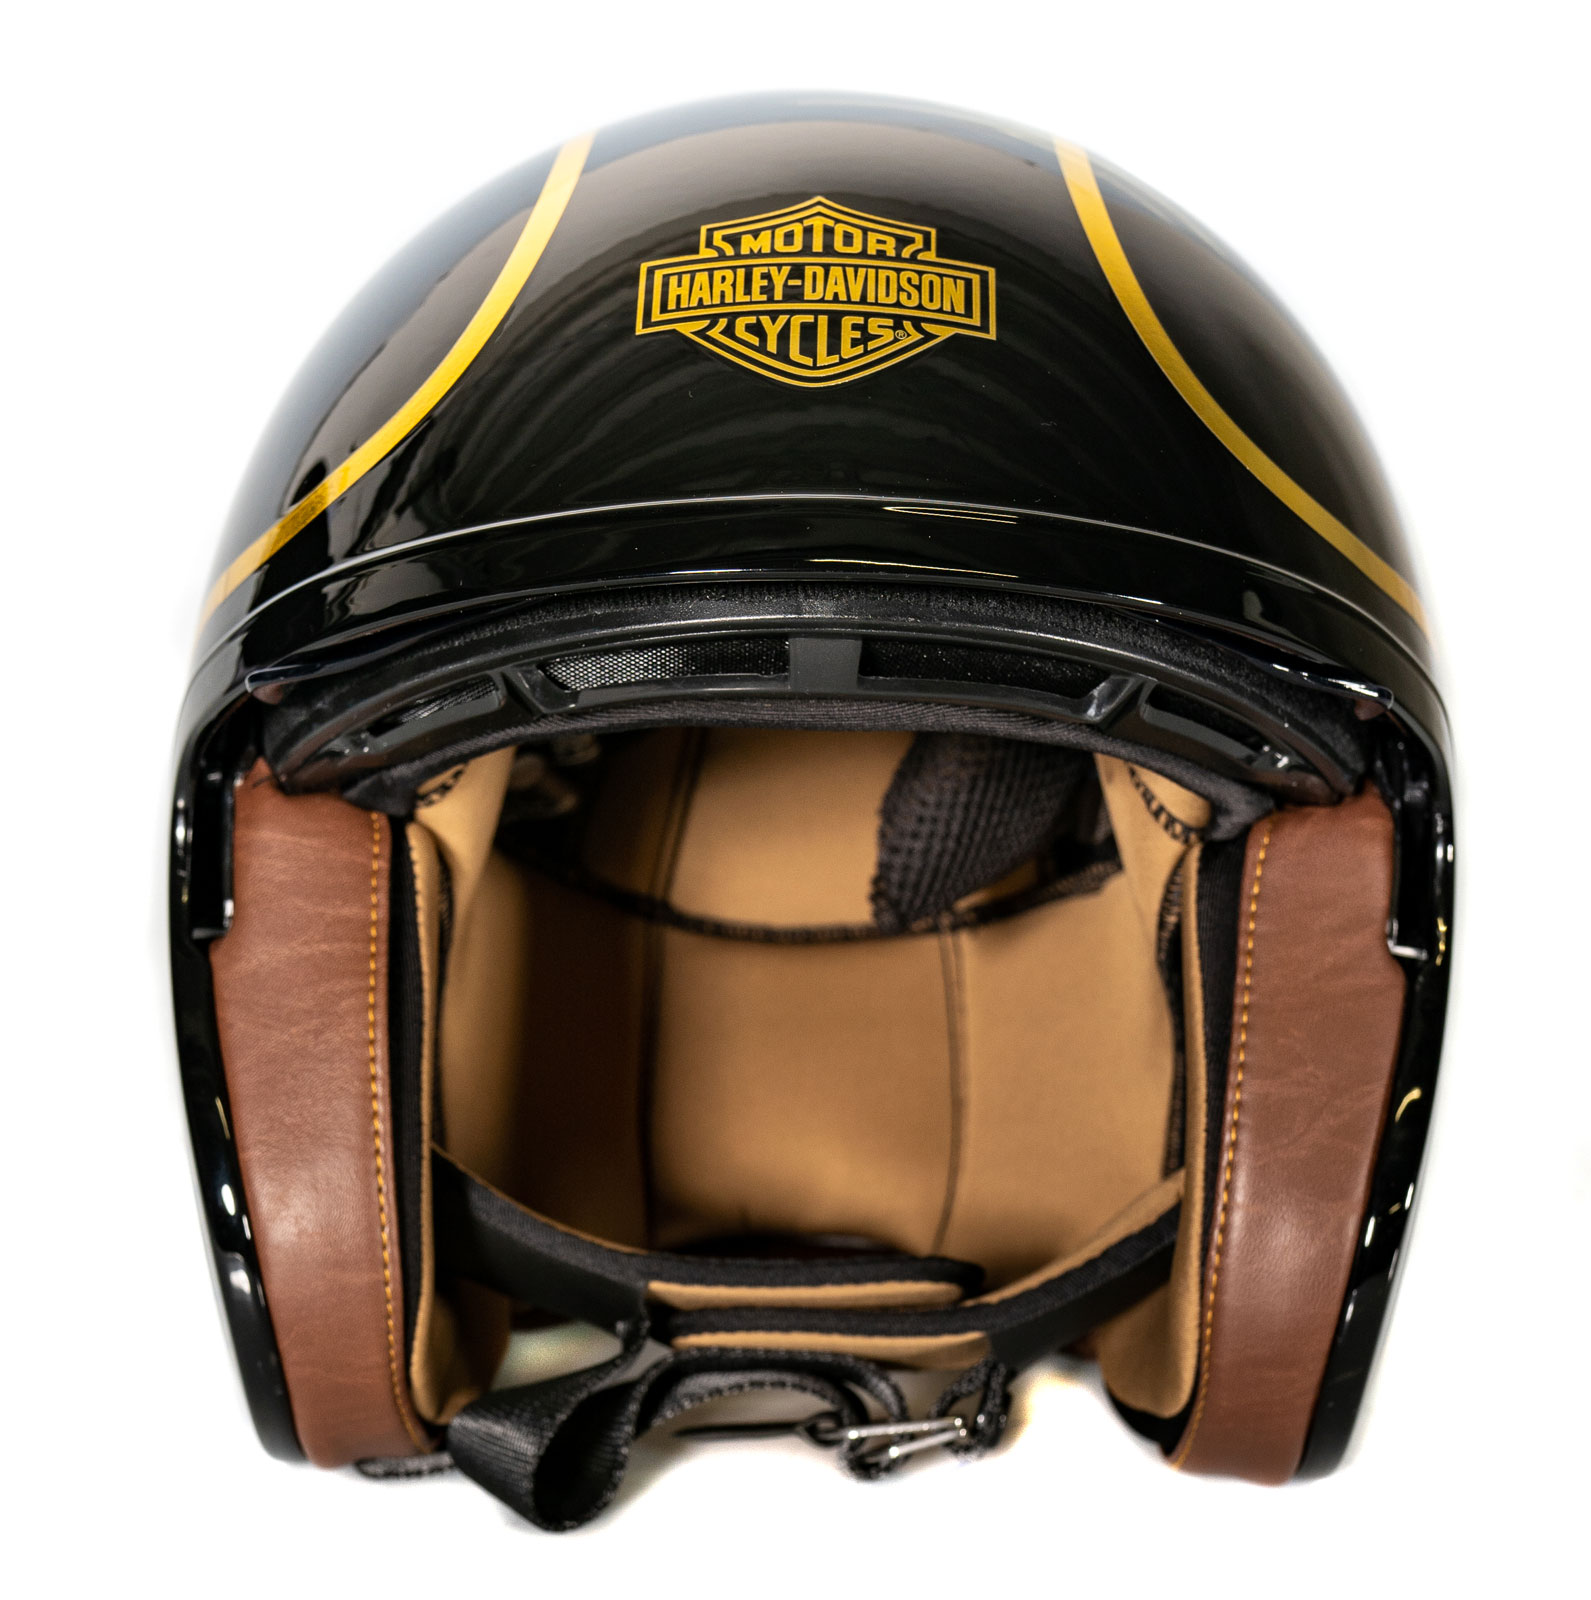 98174 20ex Harley Davidson Helmet M06 Boogie 3 4 Black Gold At Thunderbike Shop